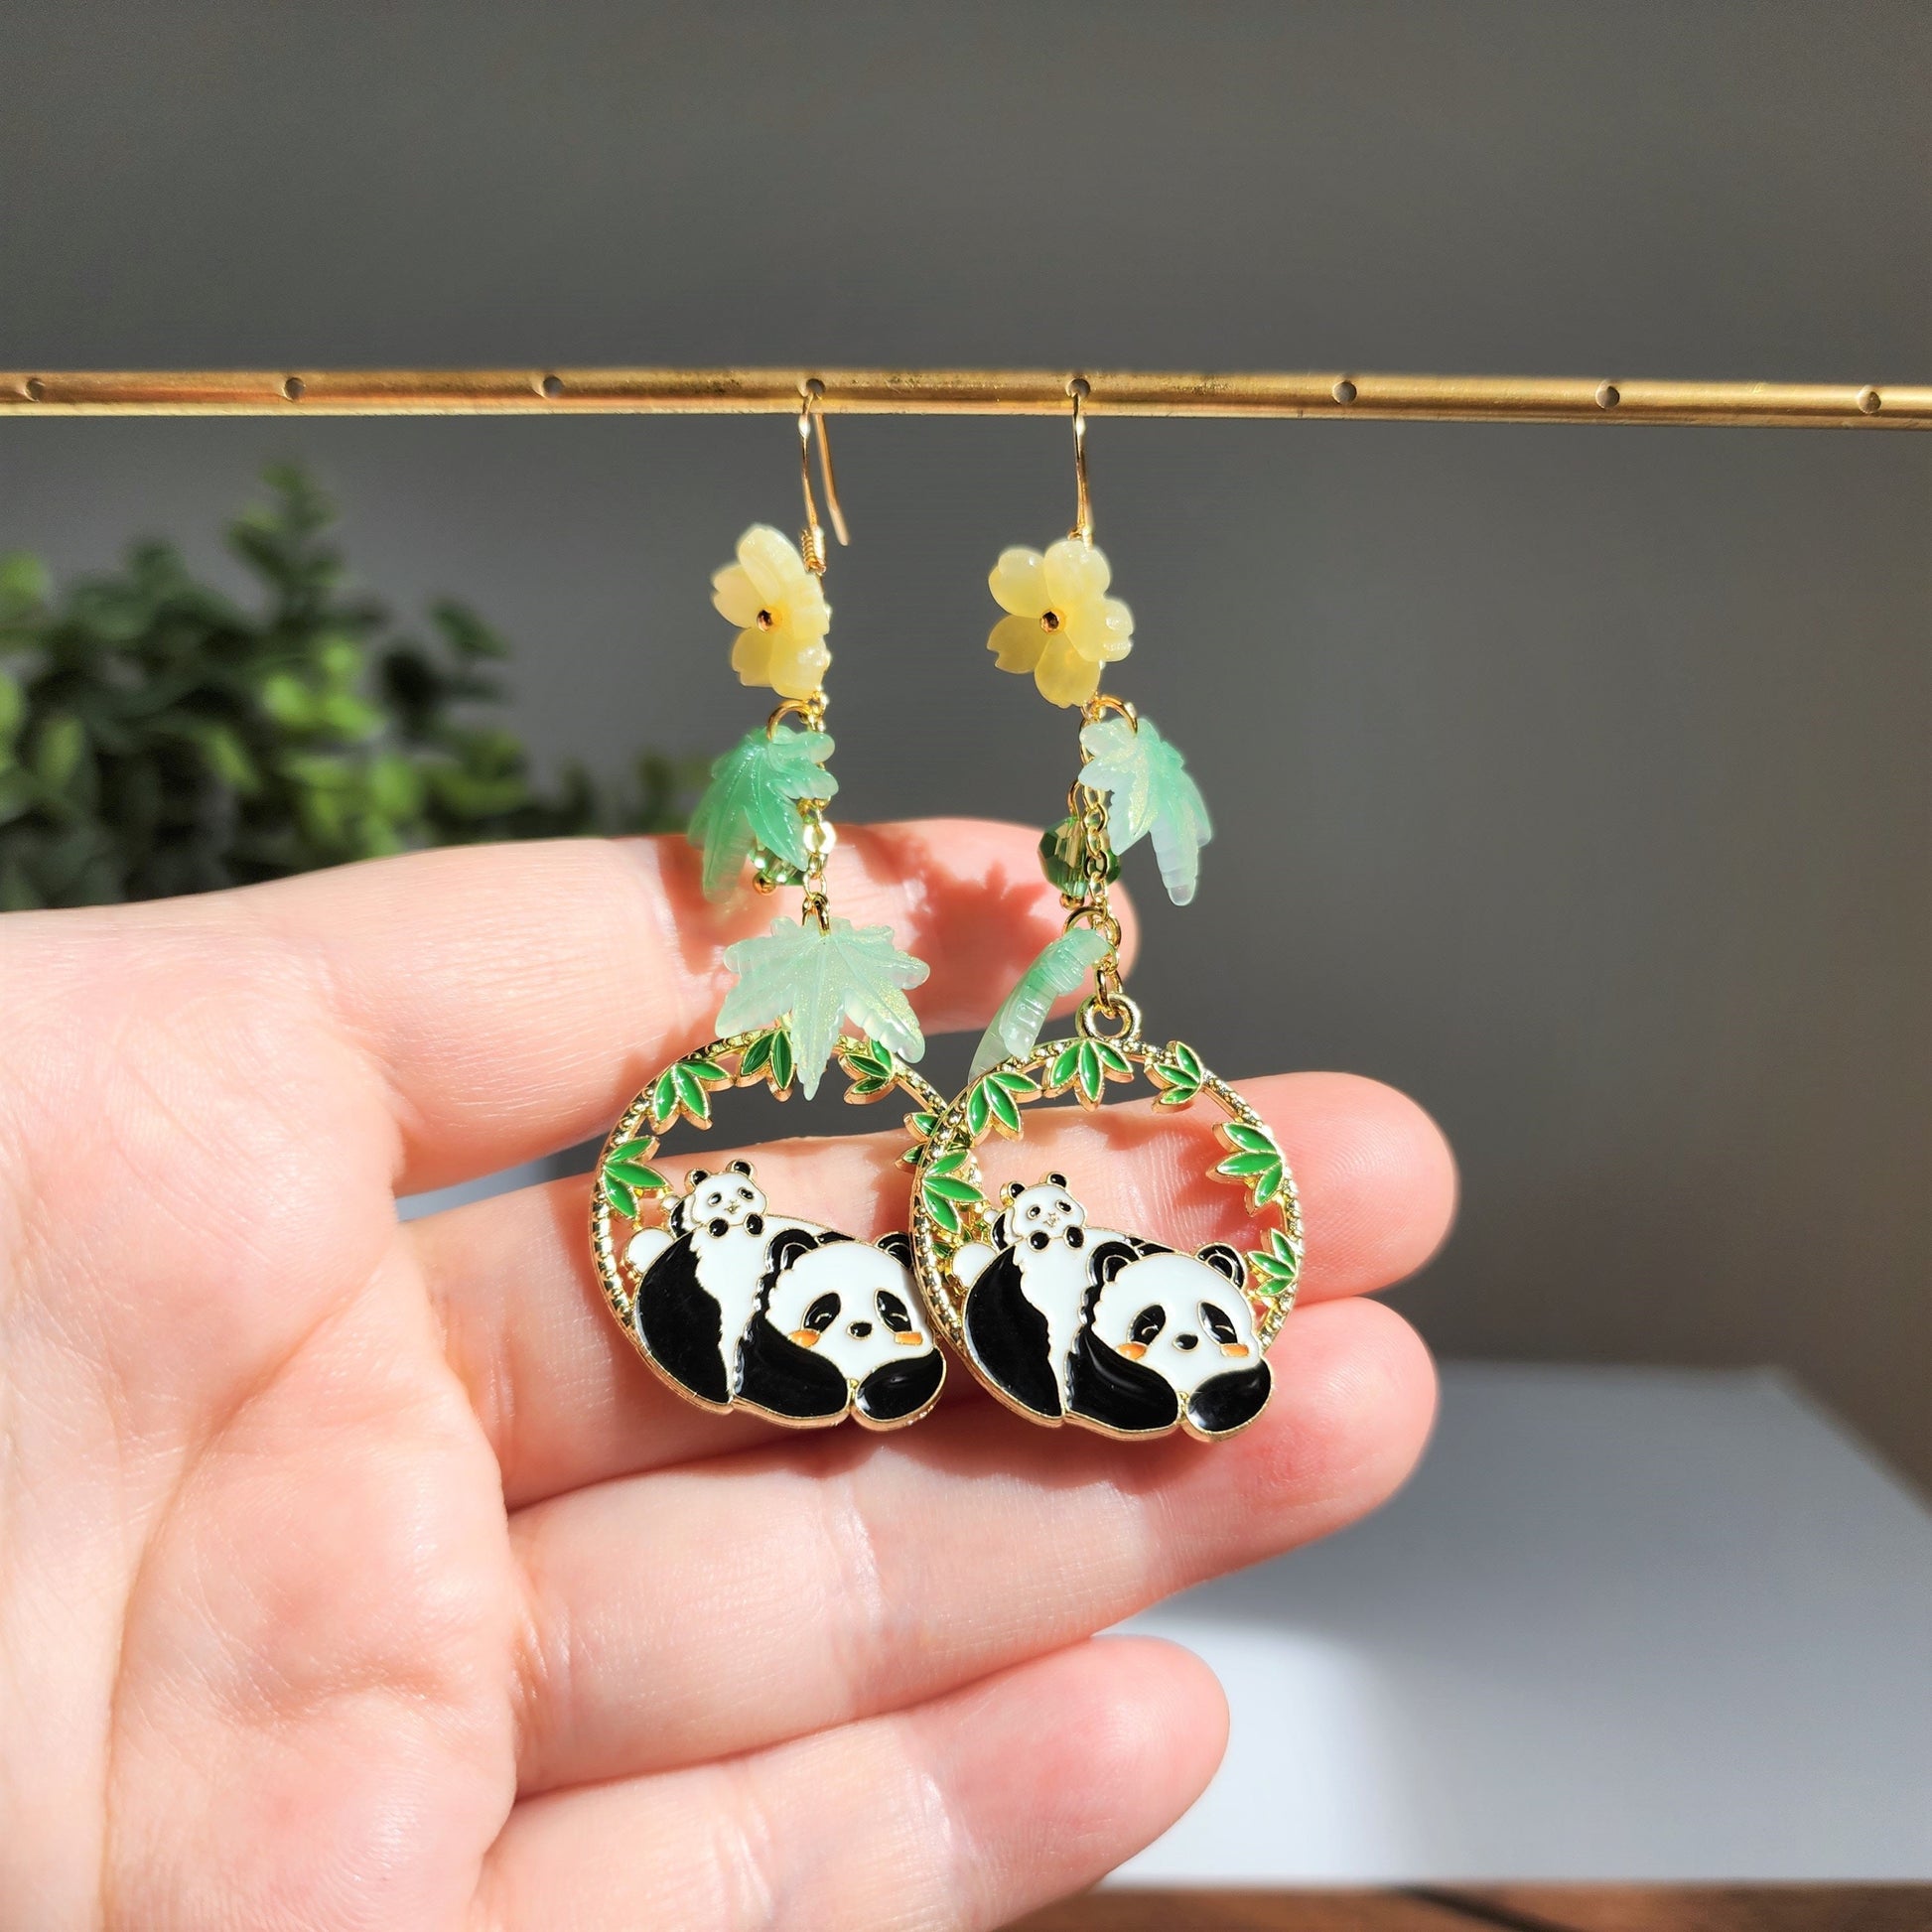 Panda resting under bamboo leaves earrings, panda dangle earrings, animal dangle earrings, gift for her